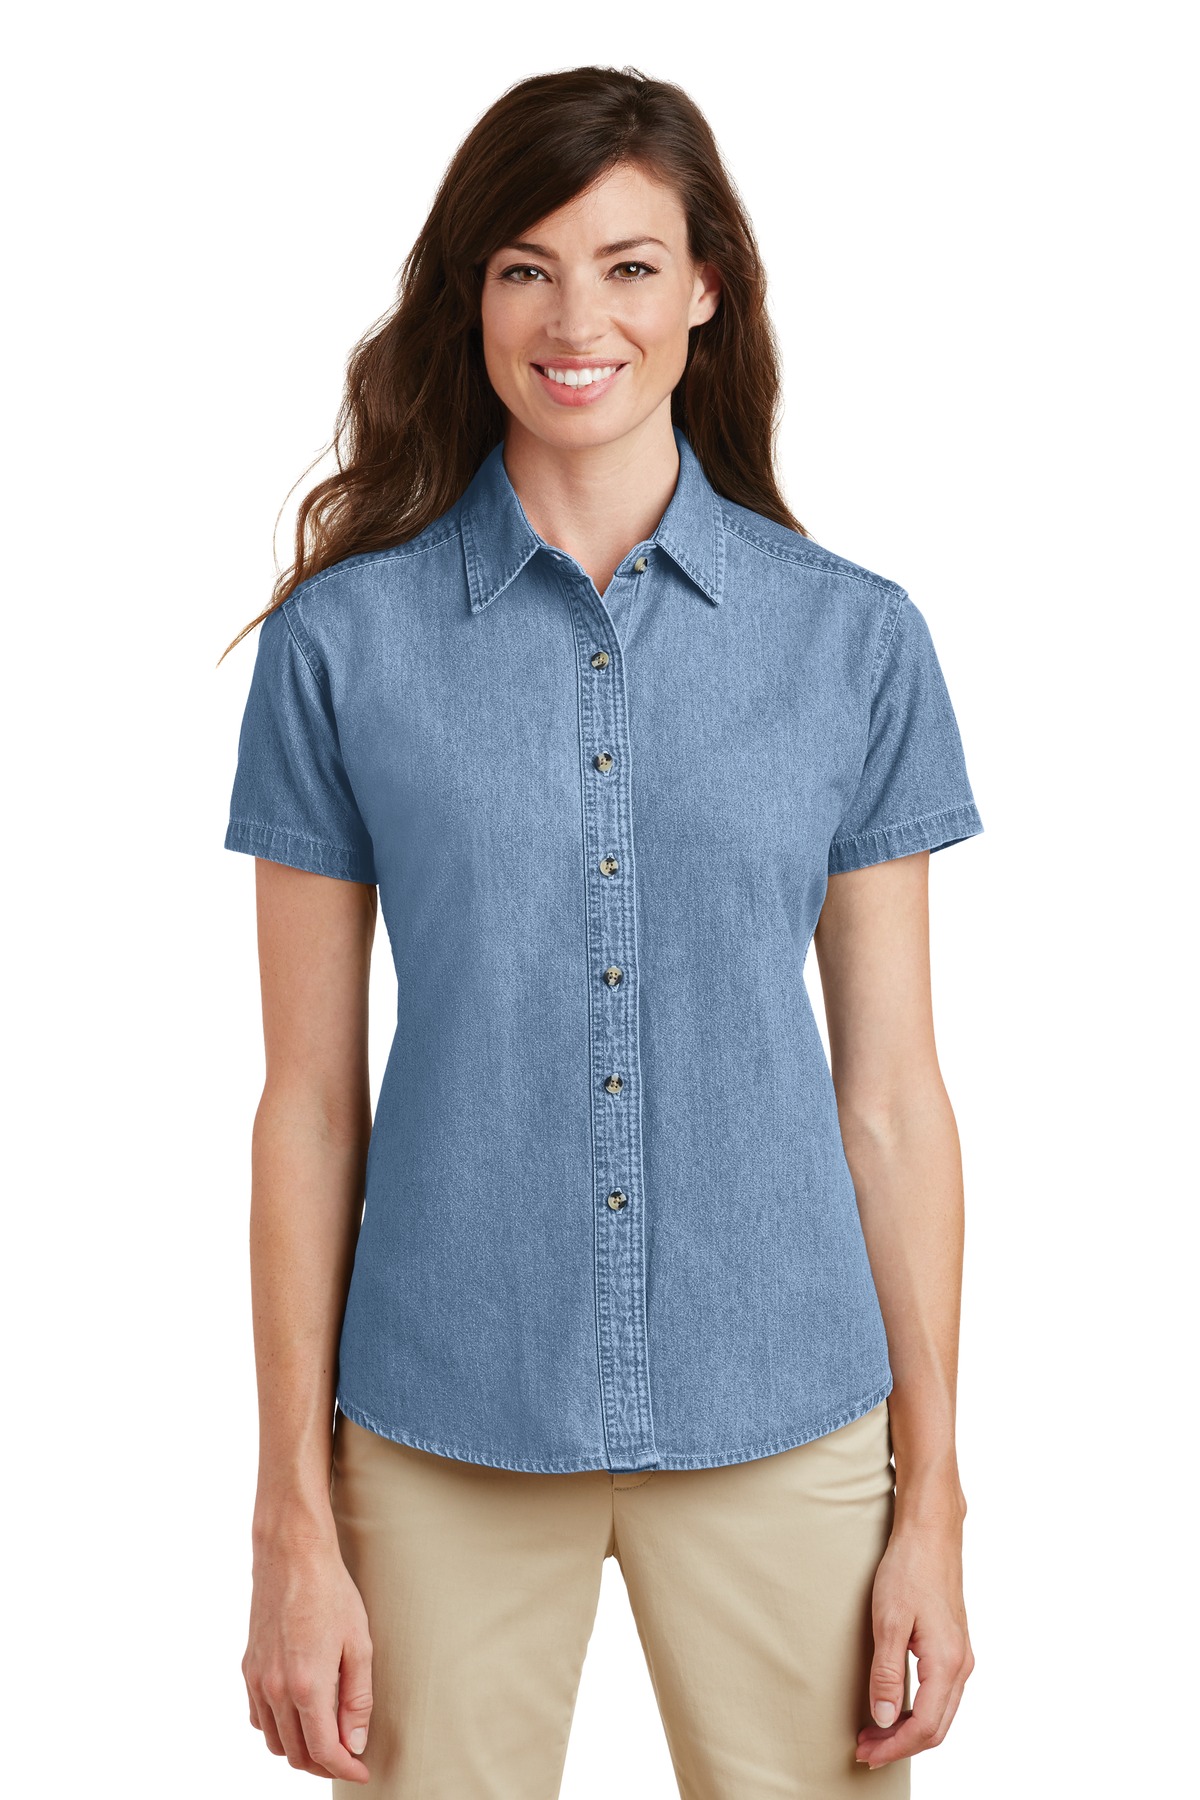 Port & Company - Ladies Short Sleeve Value Denim Shirt....